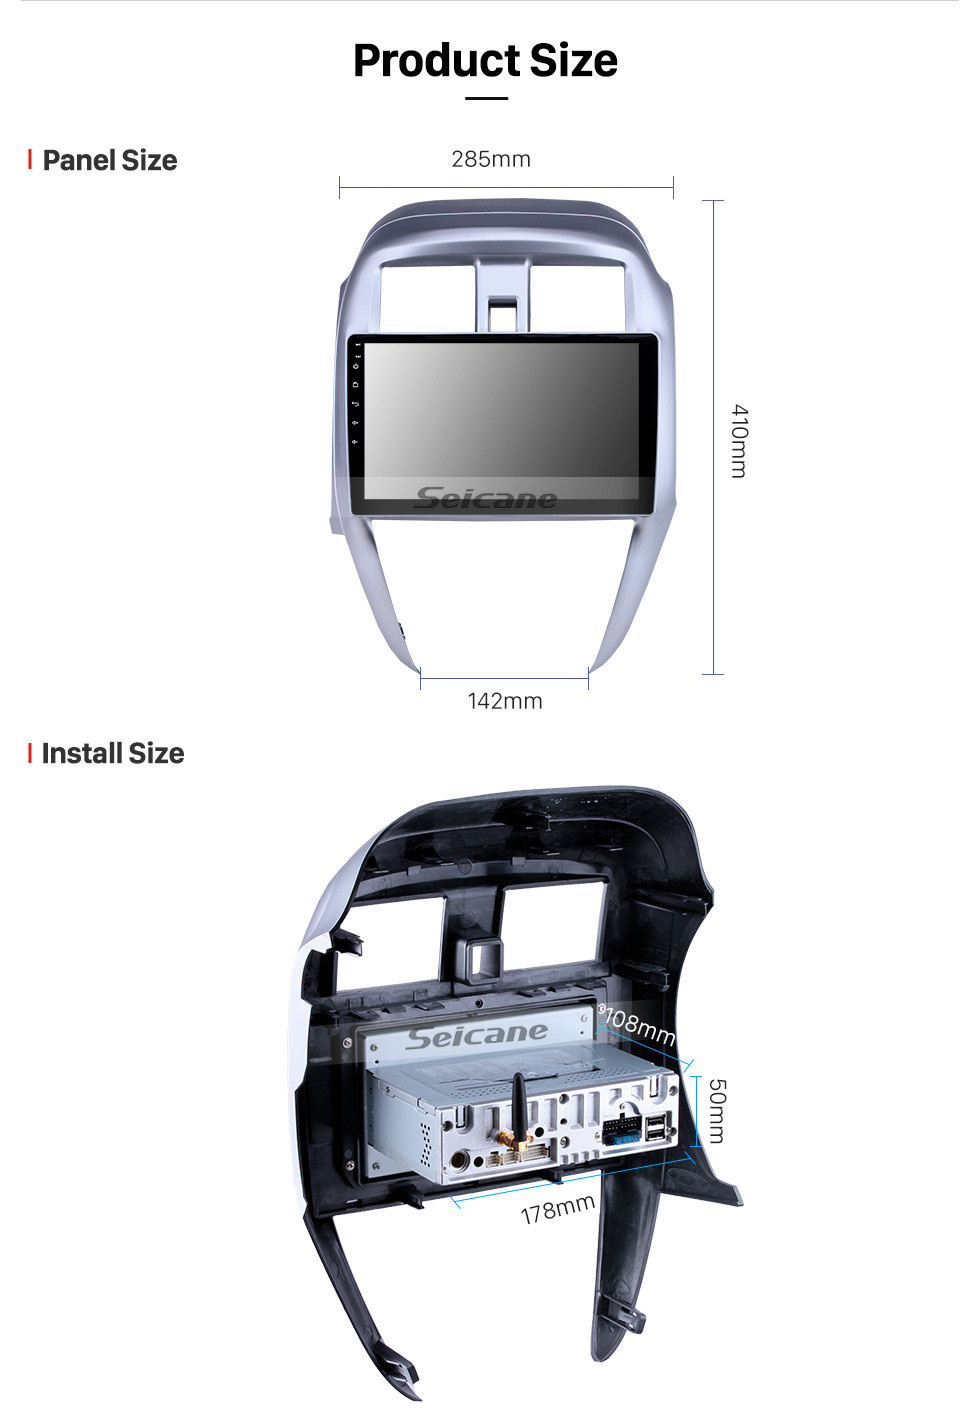 Seicane Android 11.0 Navegación GPS Estéreo con pantalla táctil de 10.1 pulgadas HD para 2015 2016 Nissan Old Sunny Bluetooth FM WIFI Control del volante USB Soporte USB Carplay AUX DVR OBD2